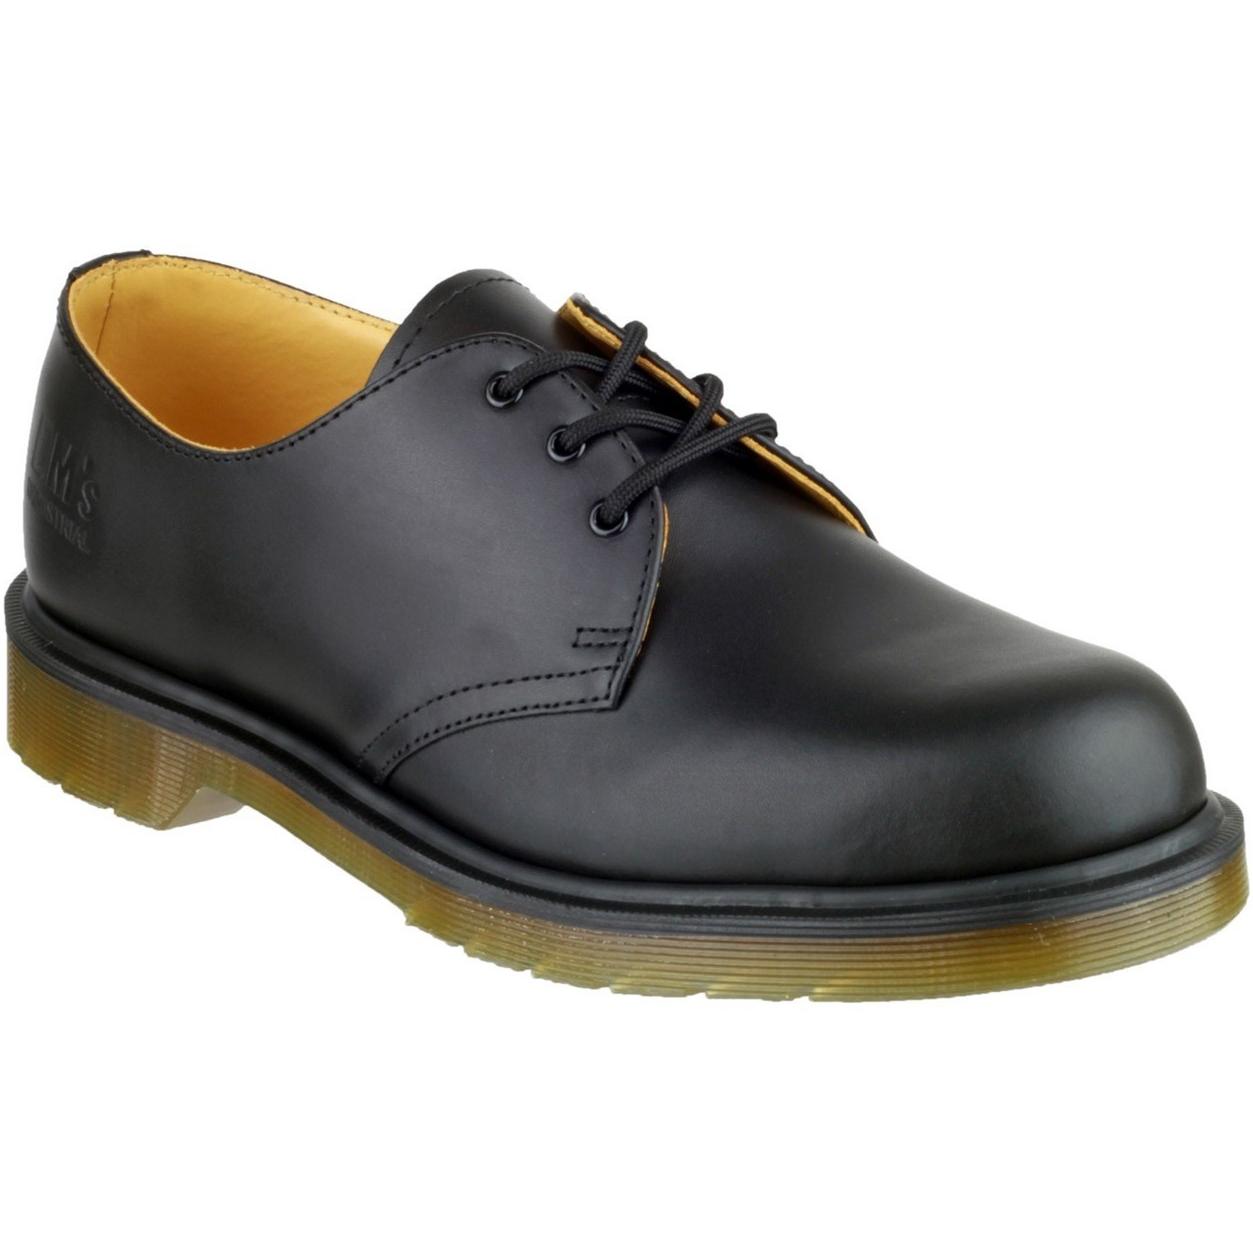 Dr Martens B8249 Lace-Up Leather Shoe